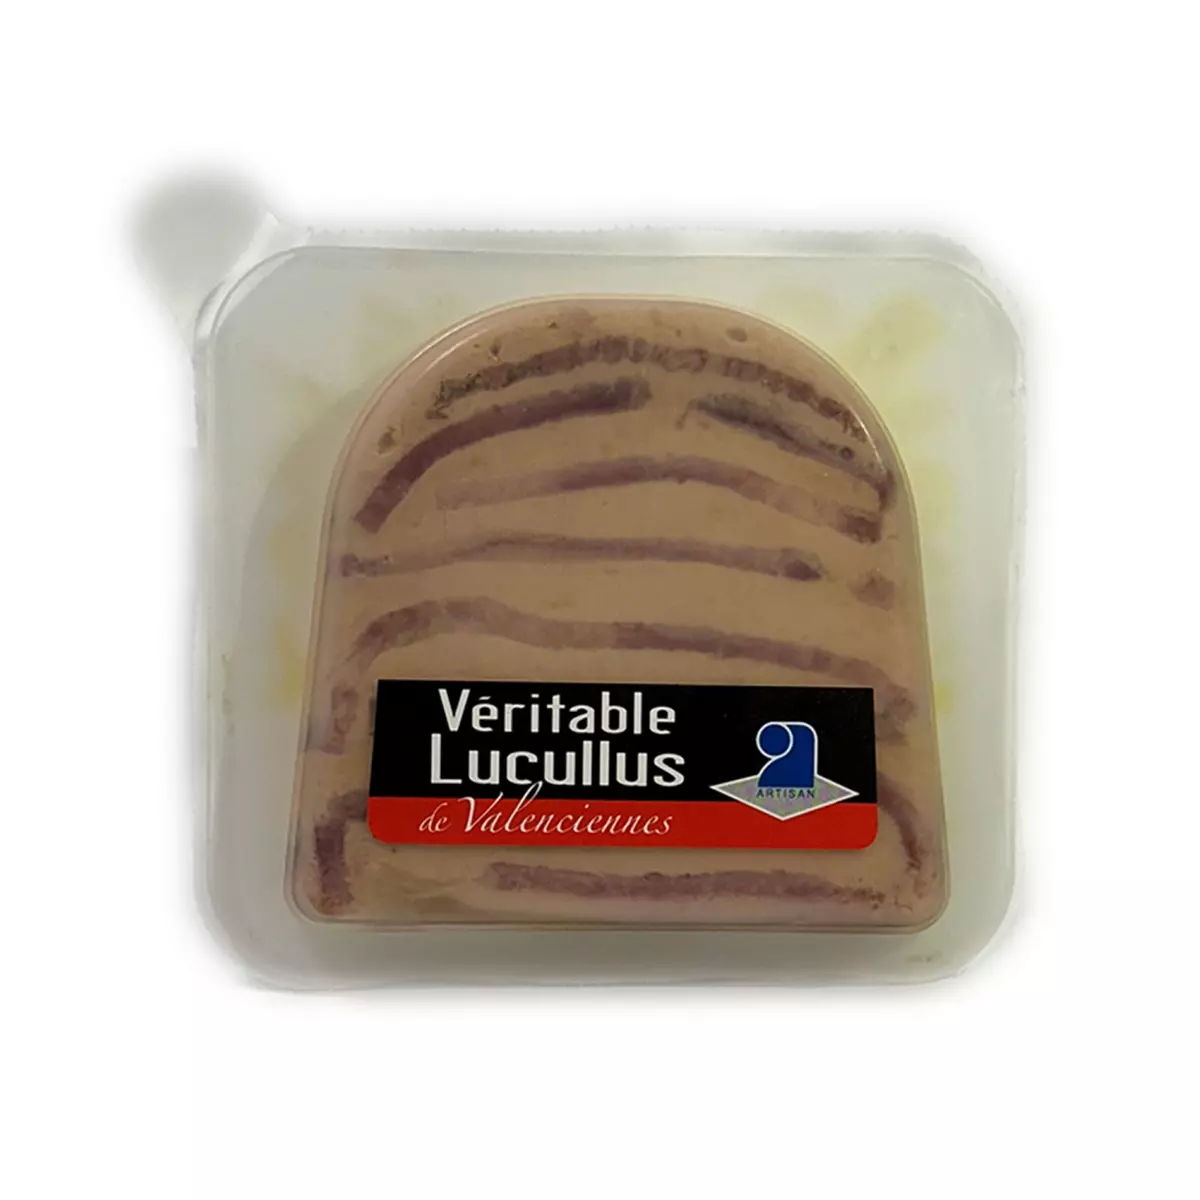 LUCULLUS Véritable Lucullus de Valenciennes 40g